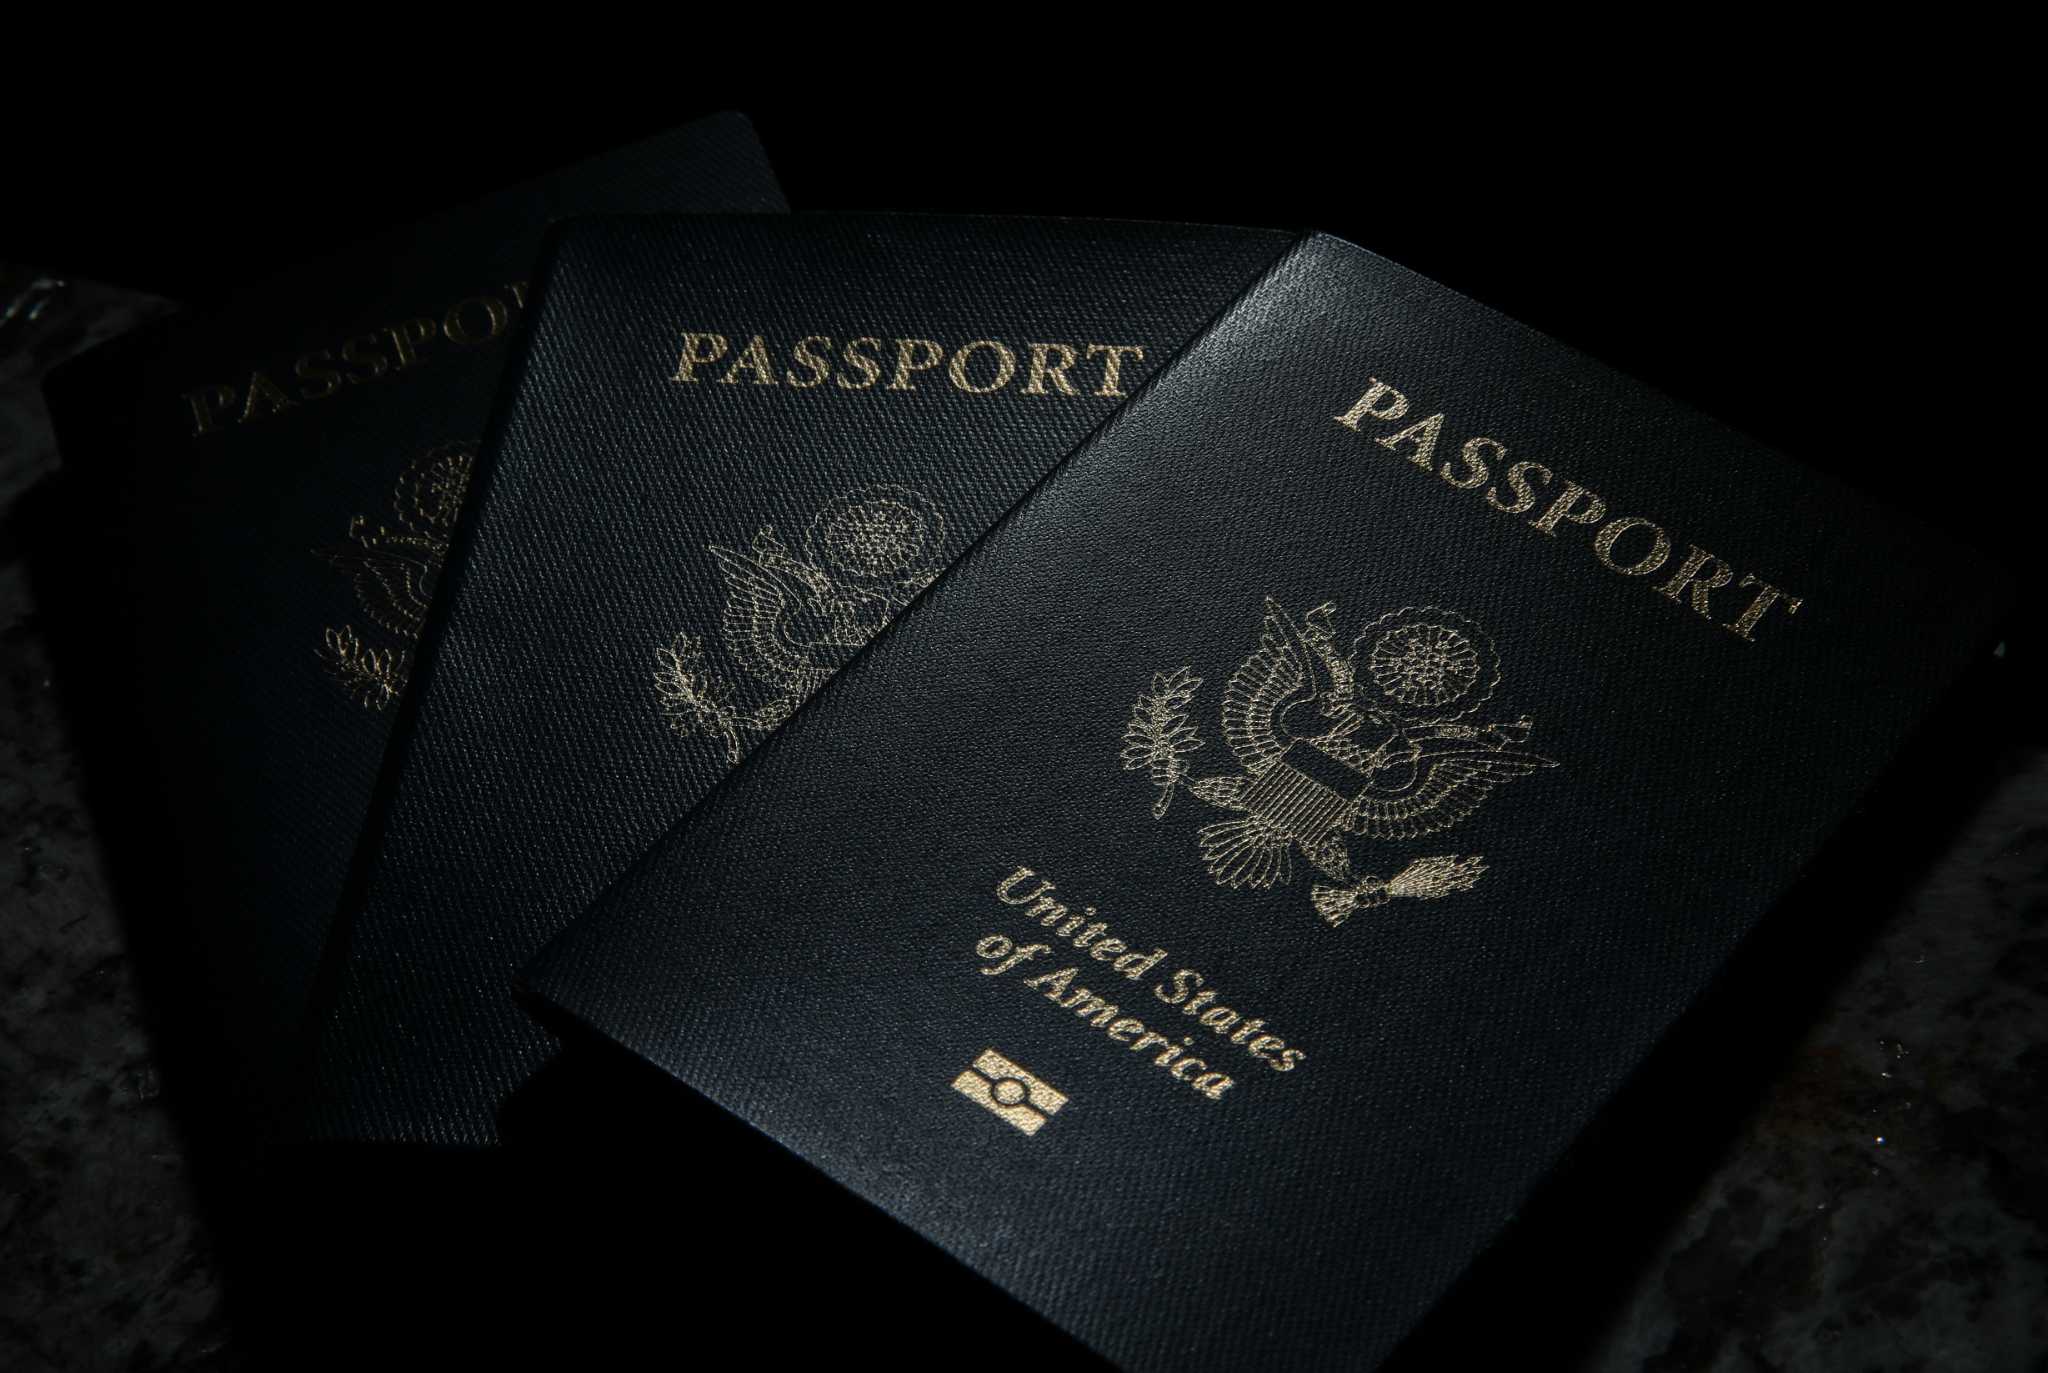 Passport wait times challenge Houston renewals as summer travel nears